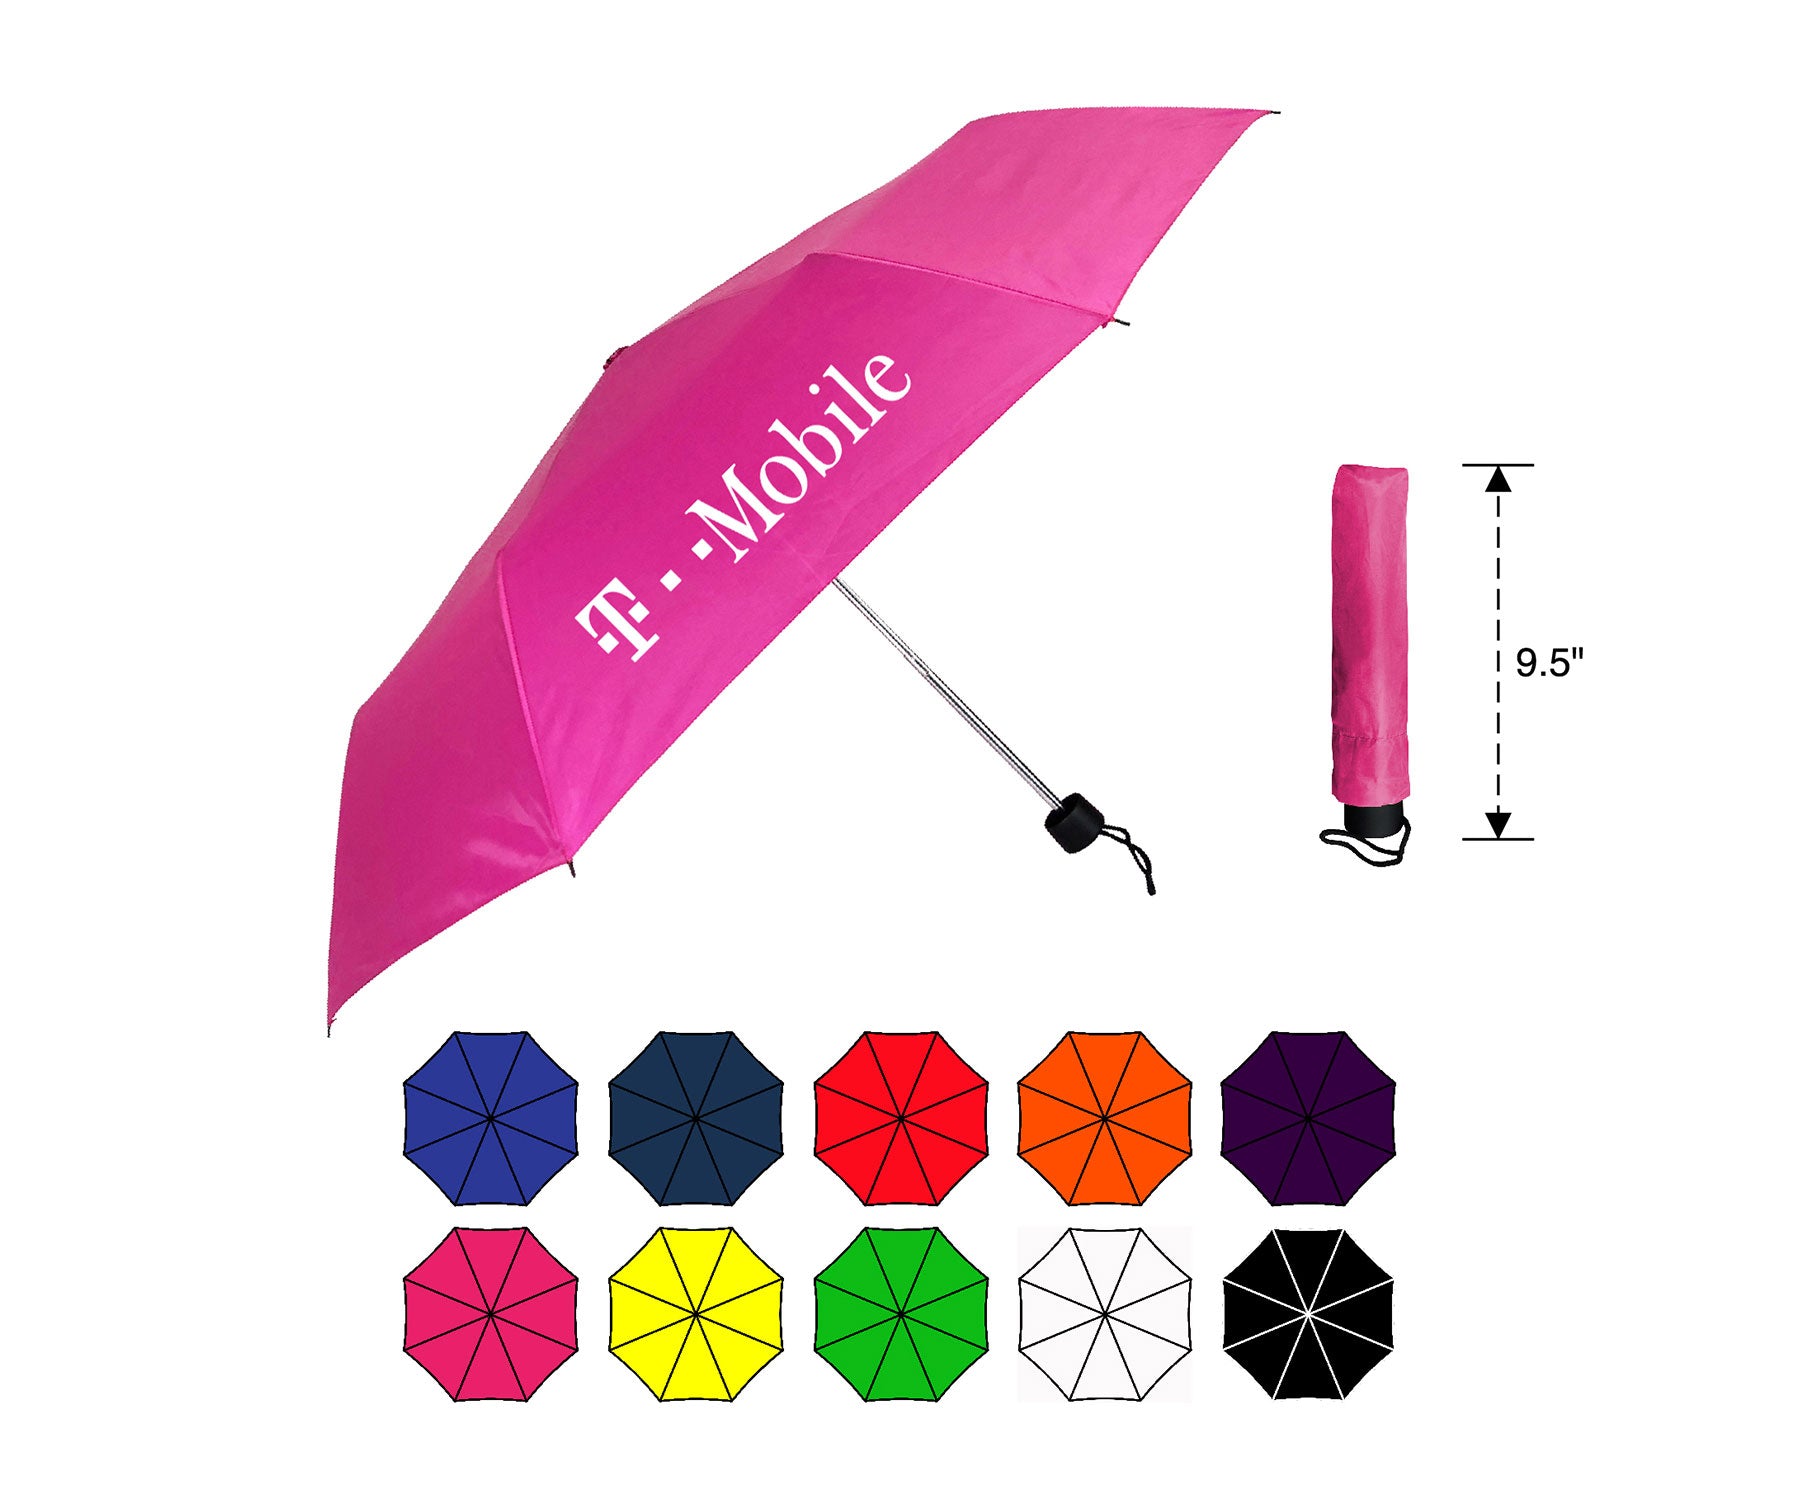 Small folding umbrella